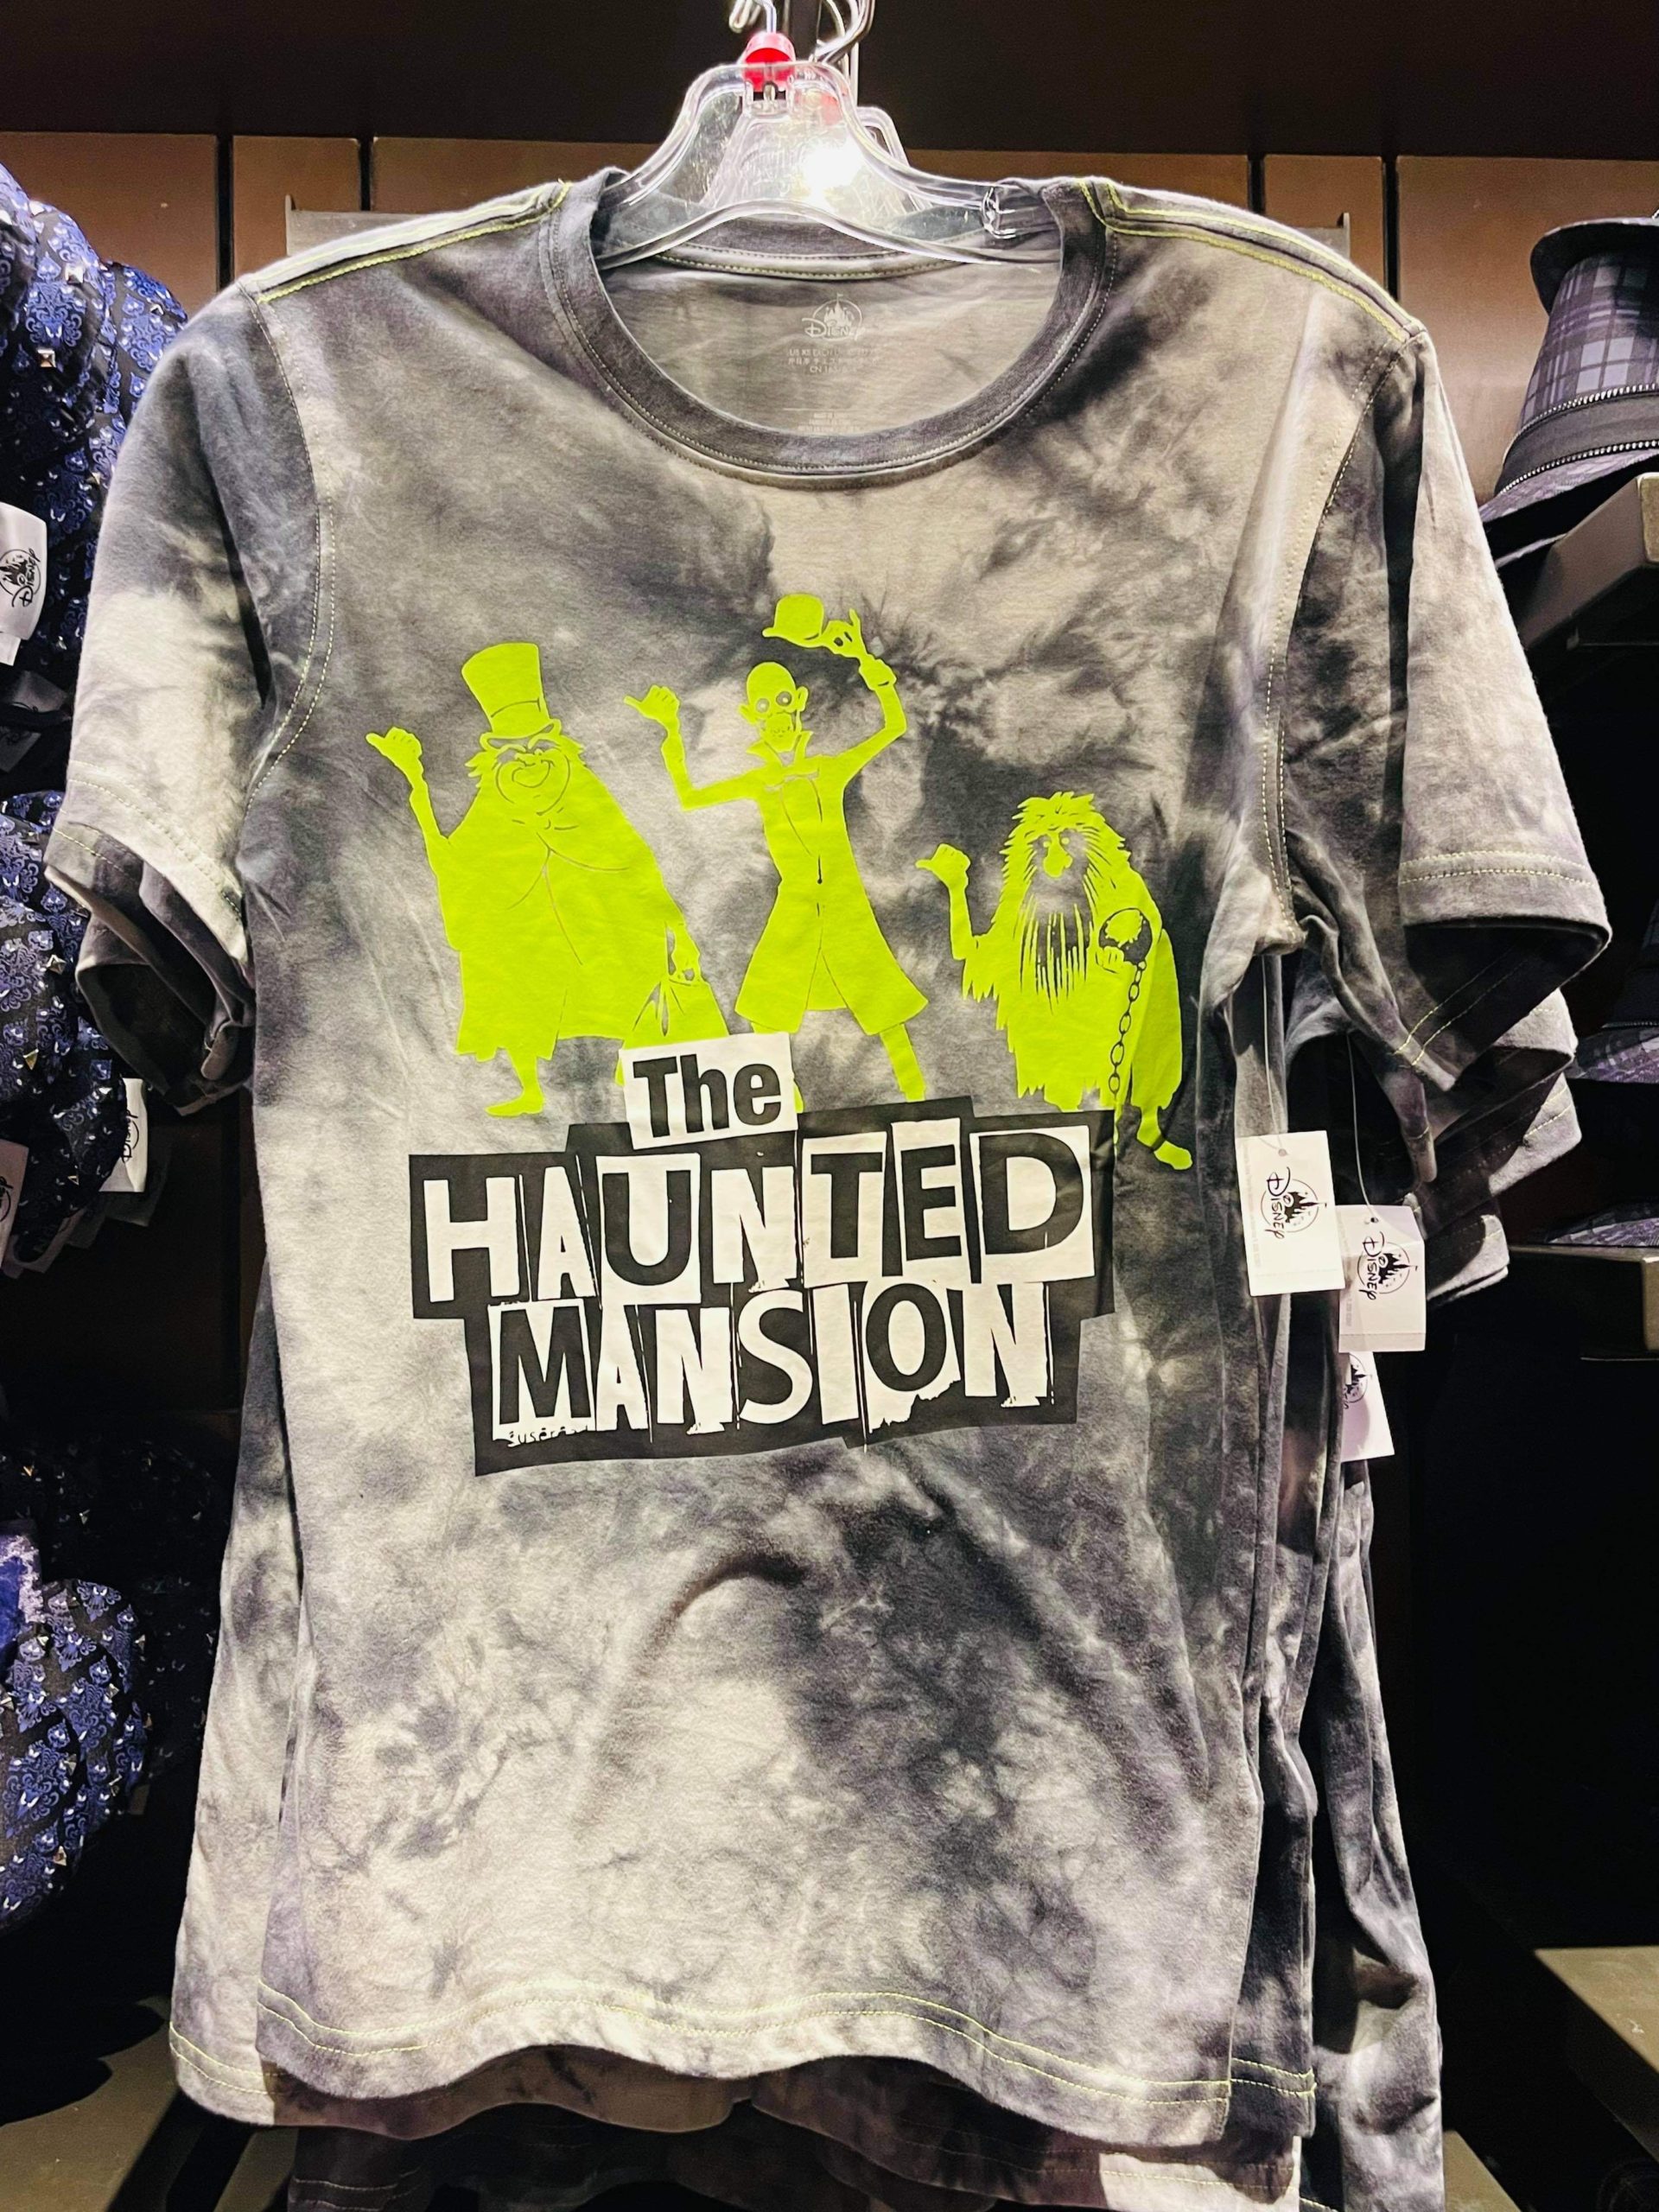 New Haunted Mansion T-Shirts in Magic Kingdom! - MickeyBlog.com %